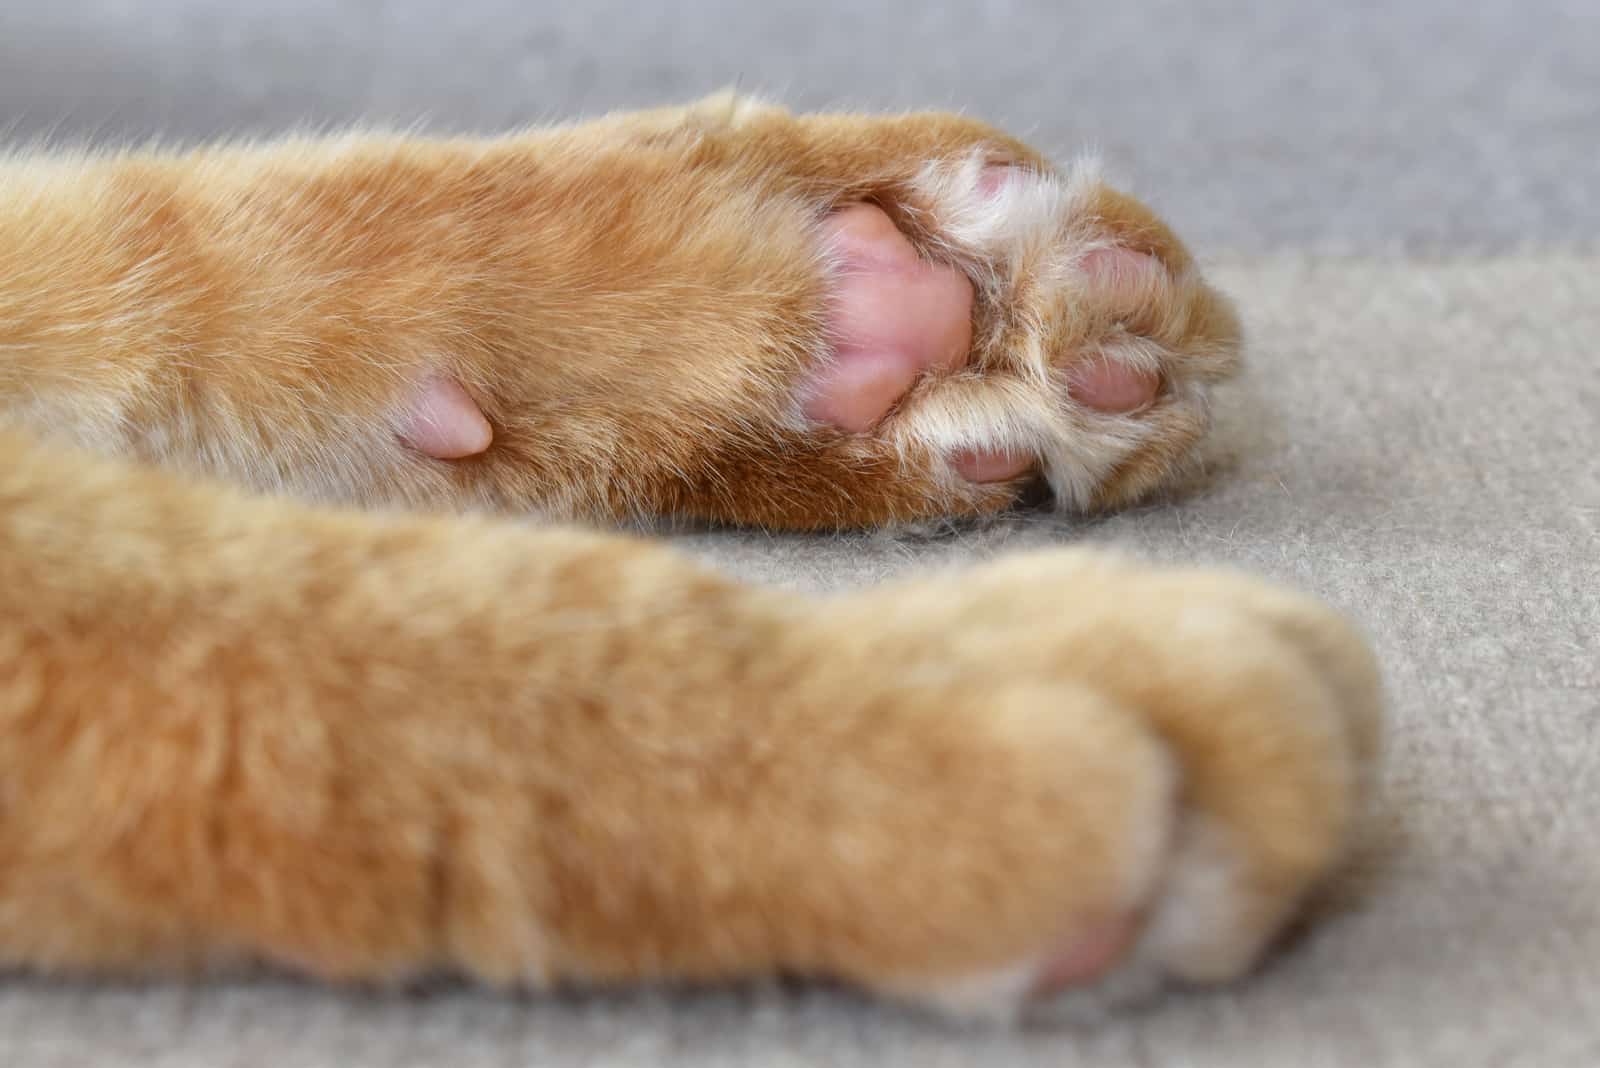 Cat Toe Beans on floor